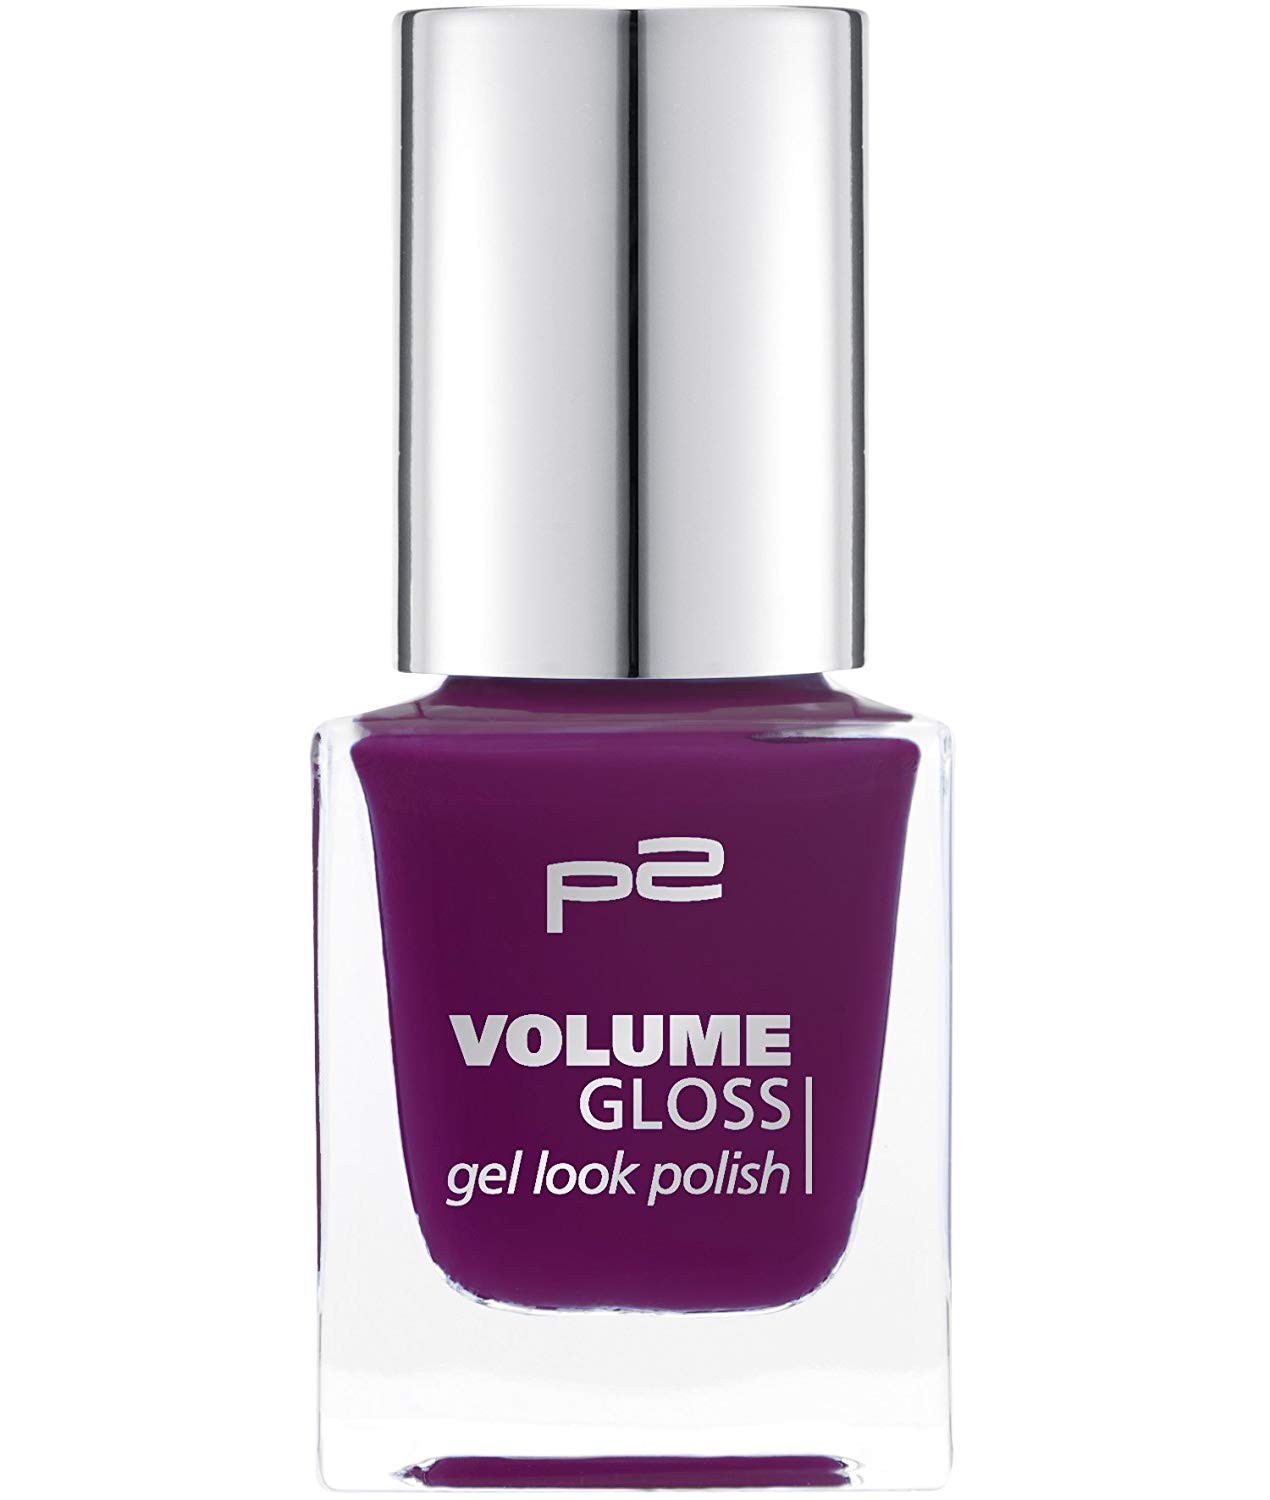 P2 Cosmetics Volume Gloss Gel Polish...